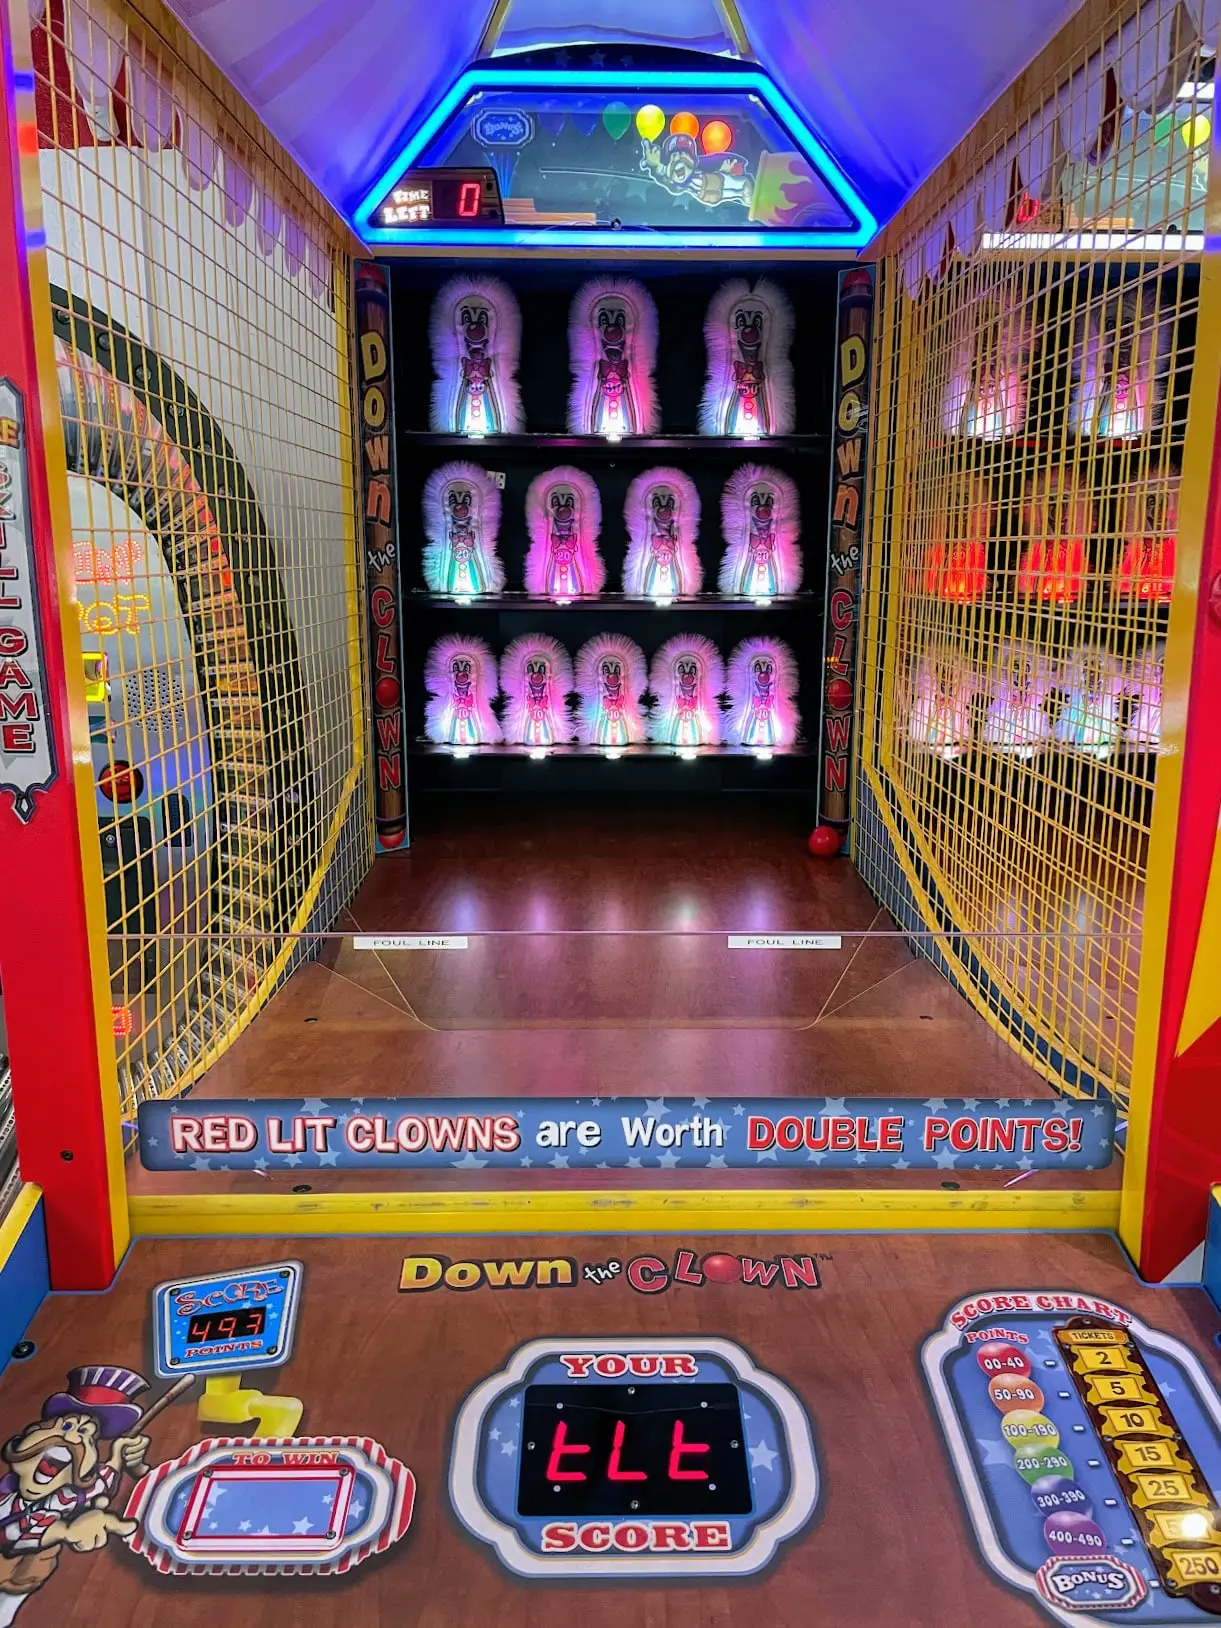 penny arcade manitou springs